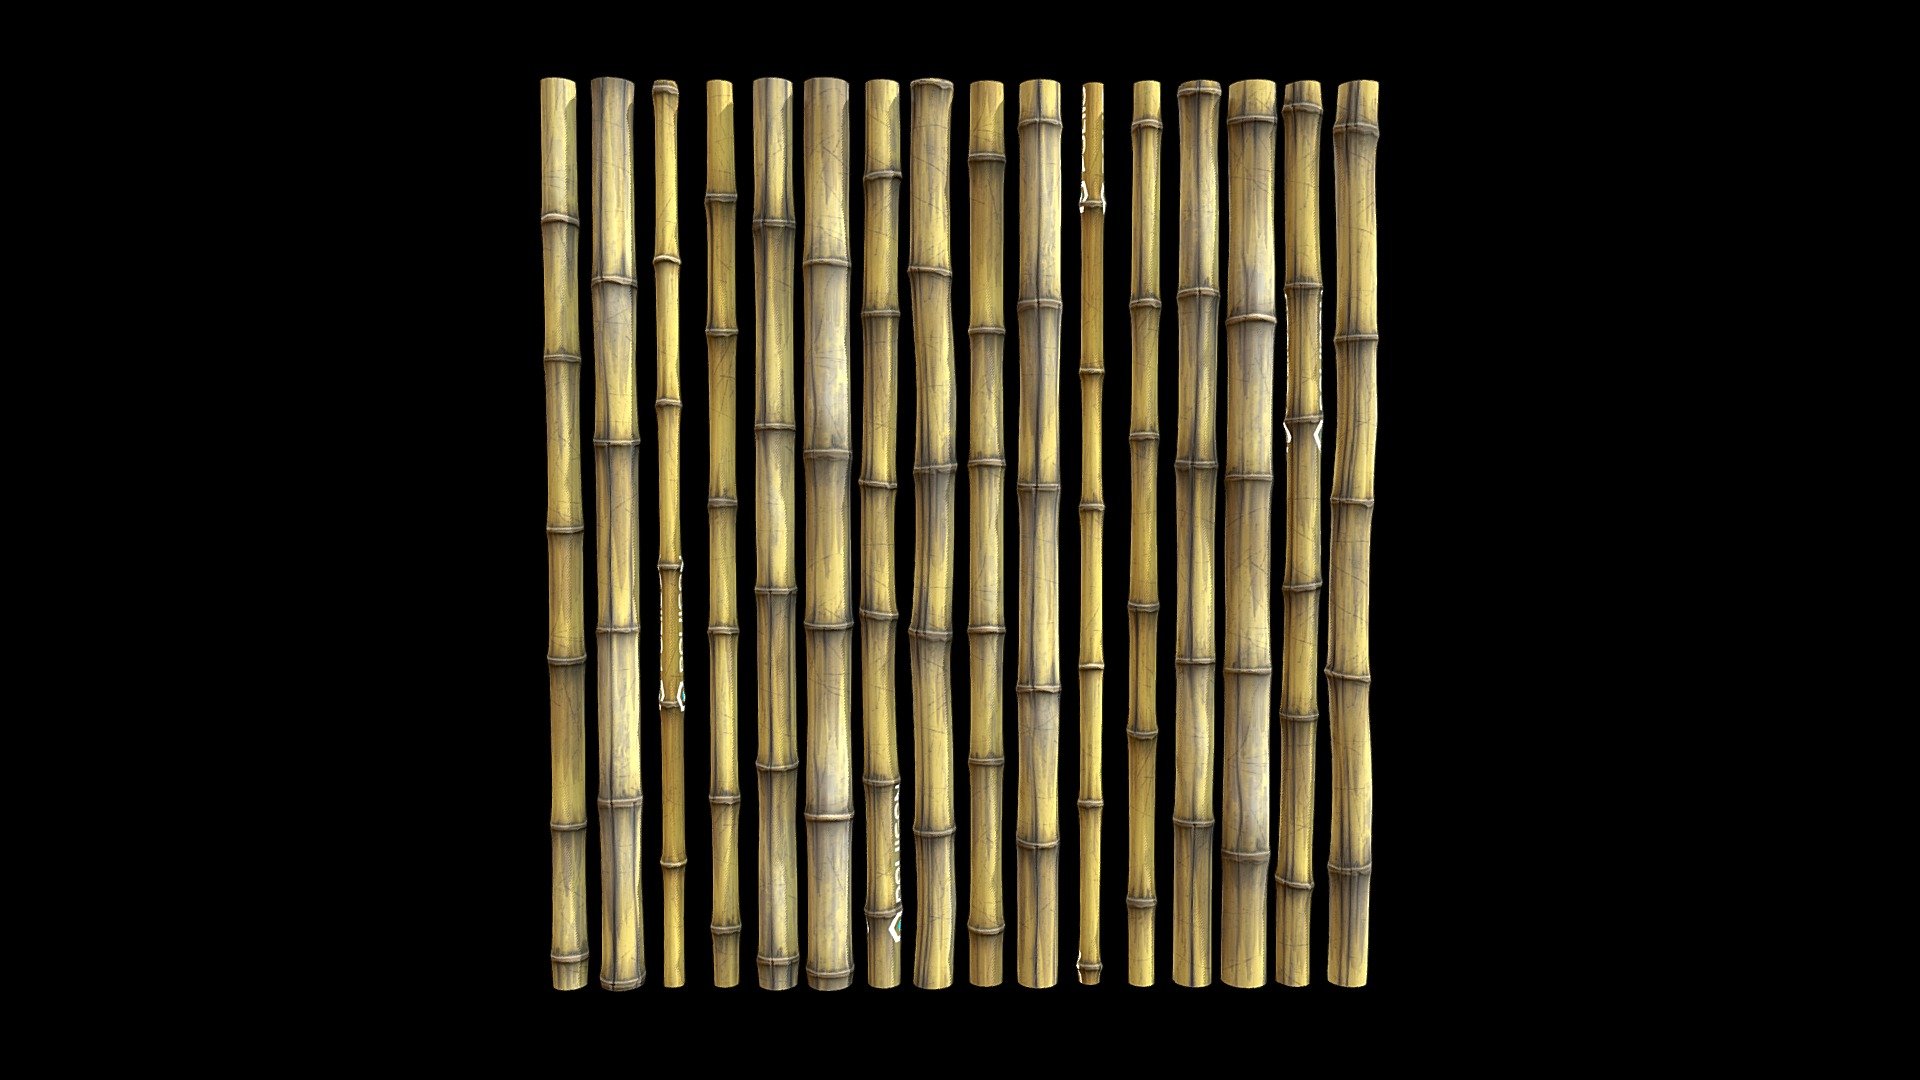 Find on Poliigon.com at https://www.poliigon.com/texture/bamboo-atlas-dried-old-001 - Bamboo Atlas Dried Old 001 - 3D model by Poliigon.com (@poliigon) 3d model